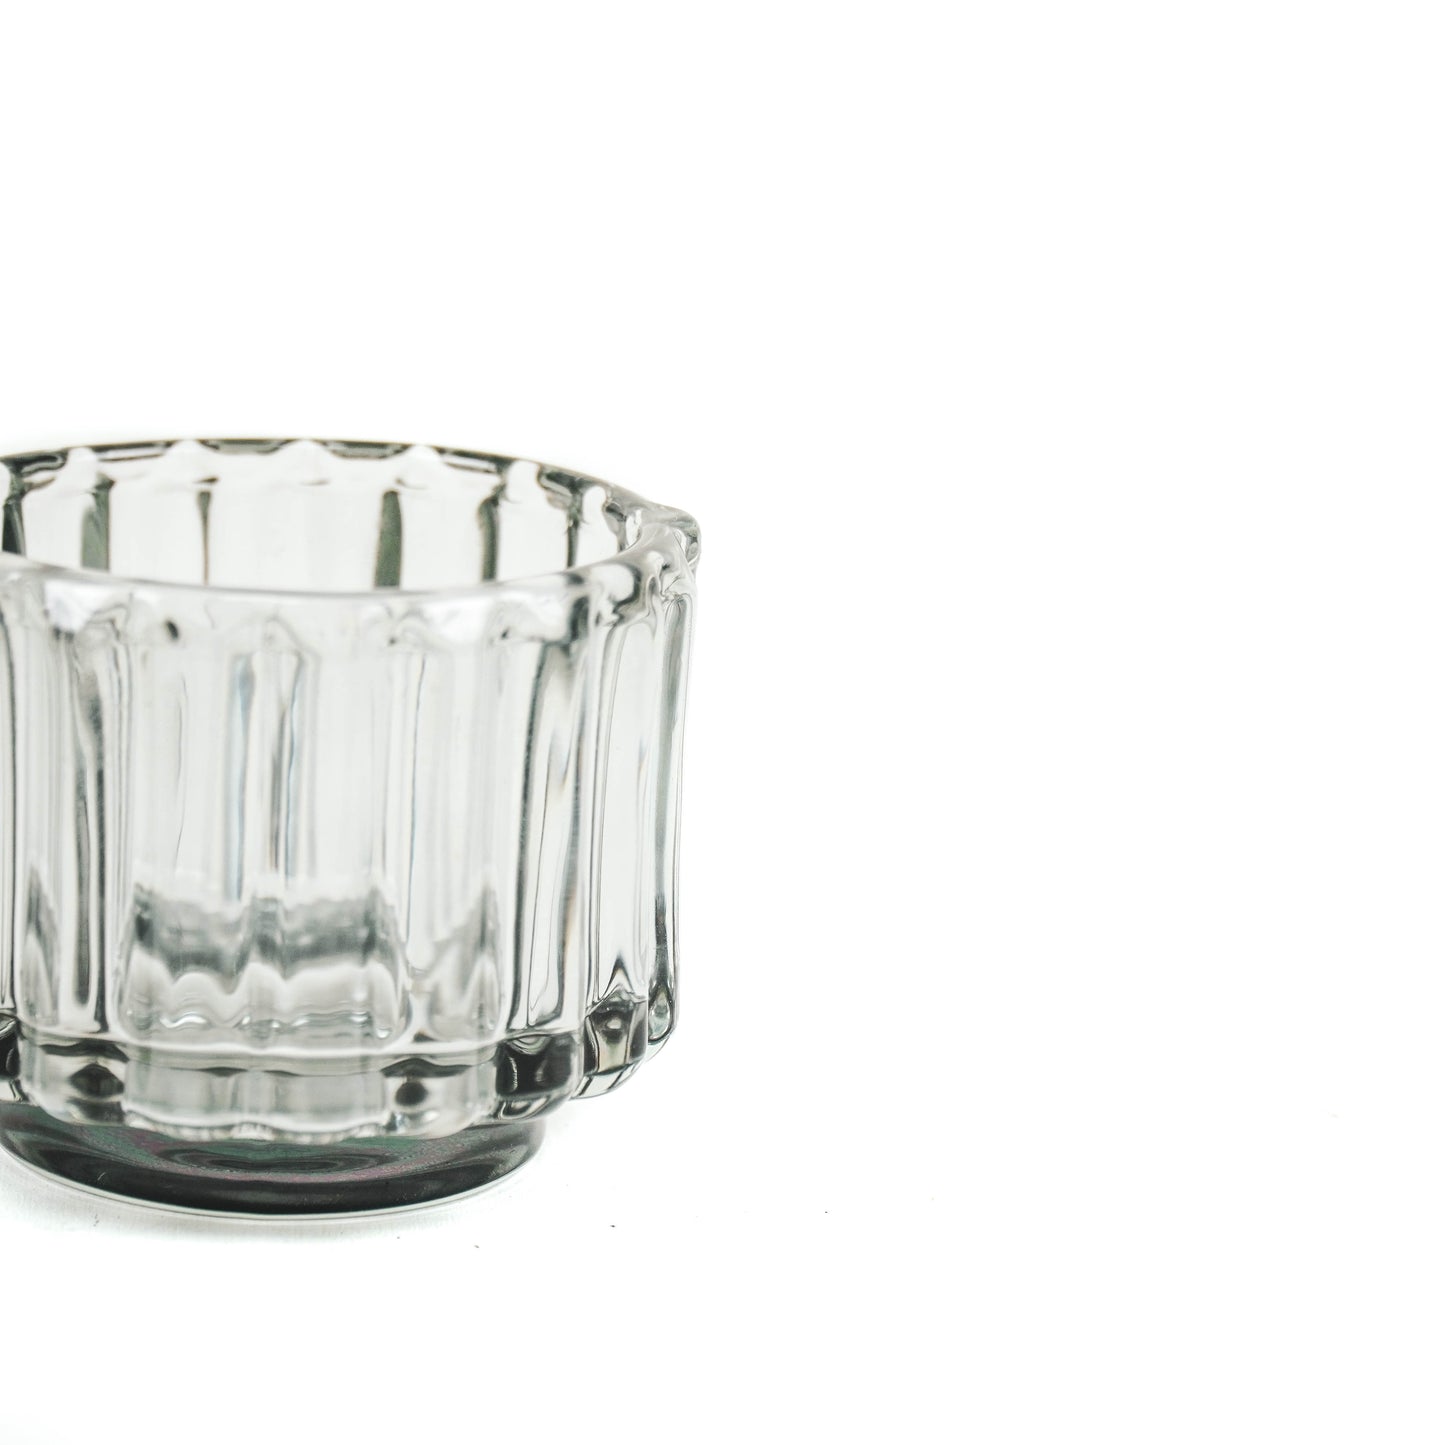 HV Glass Tealightholder Candleholder - Smokey - 8x6.5cm